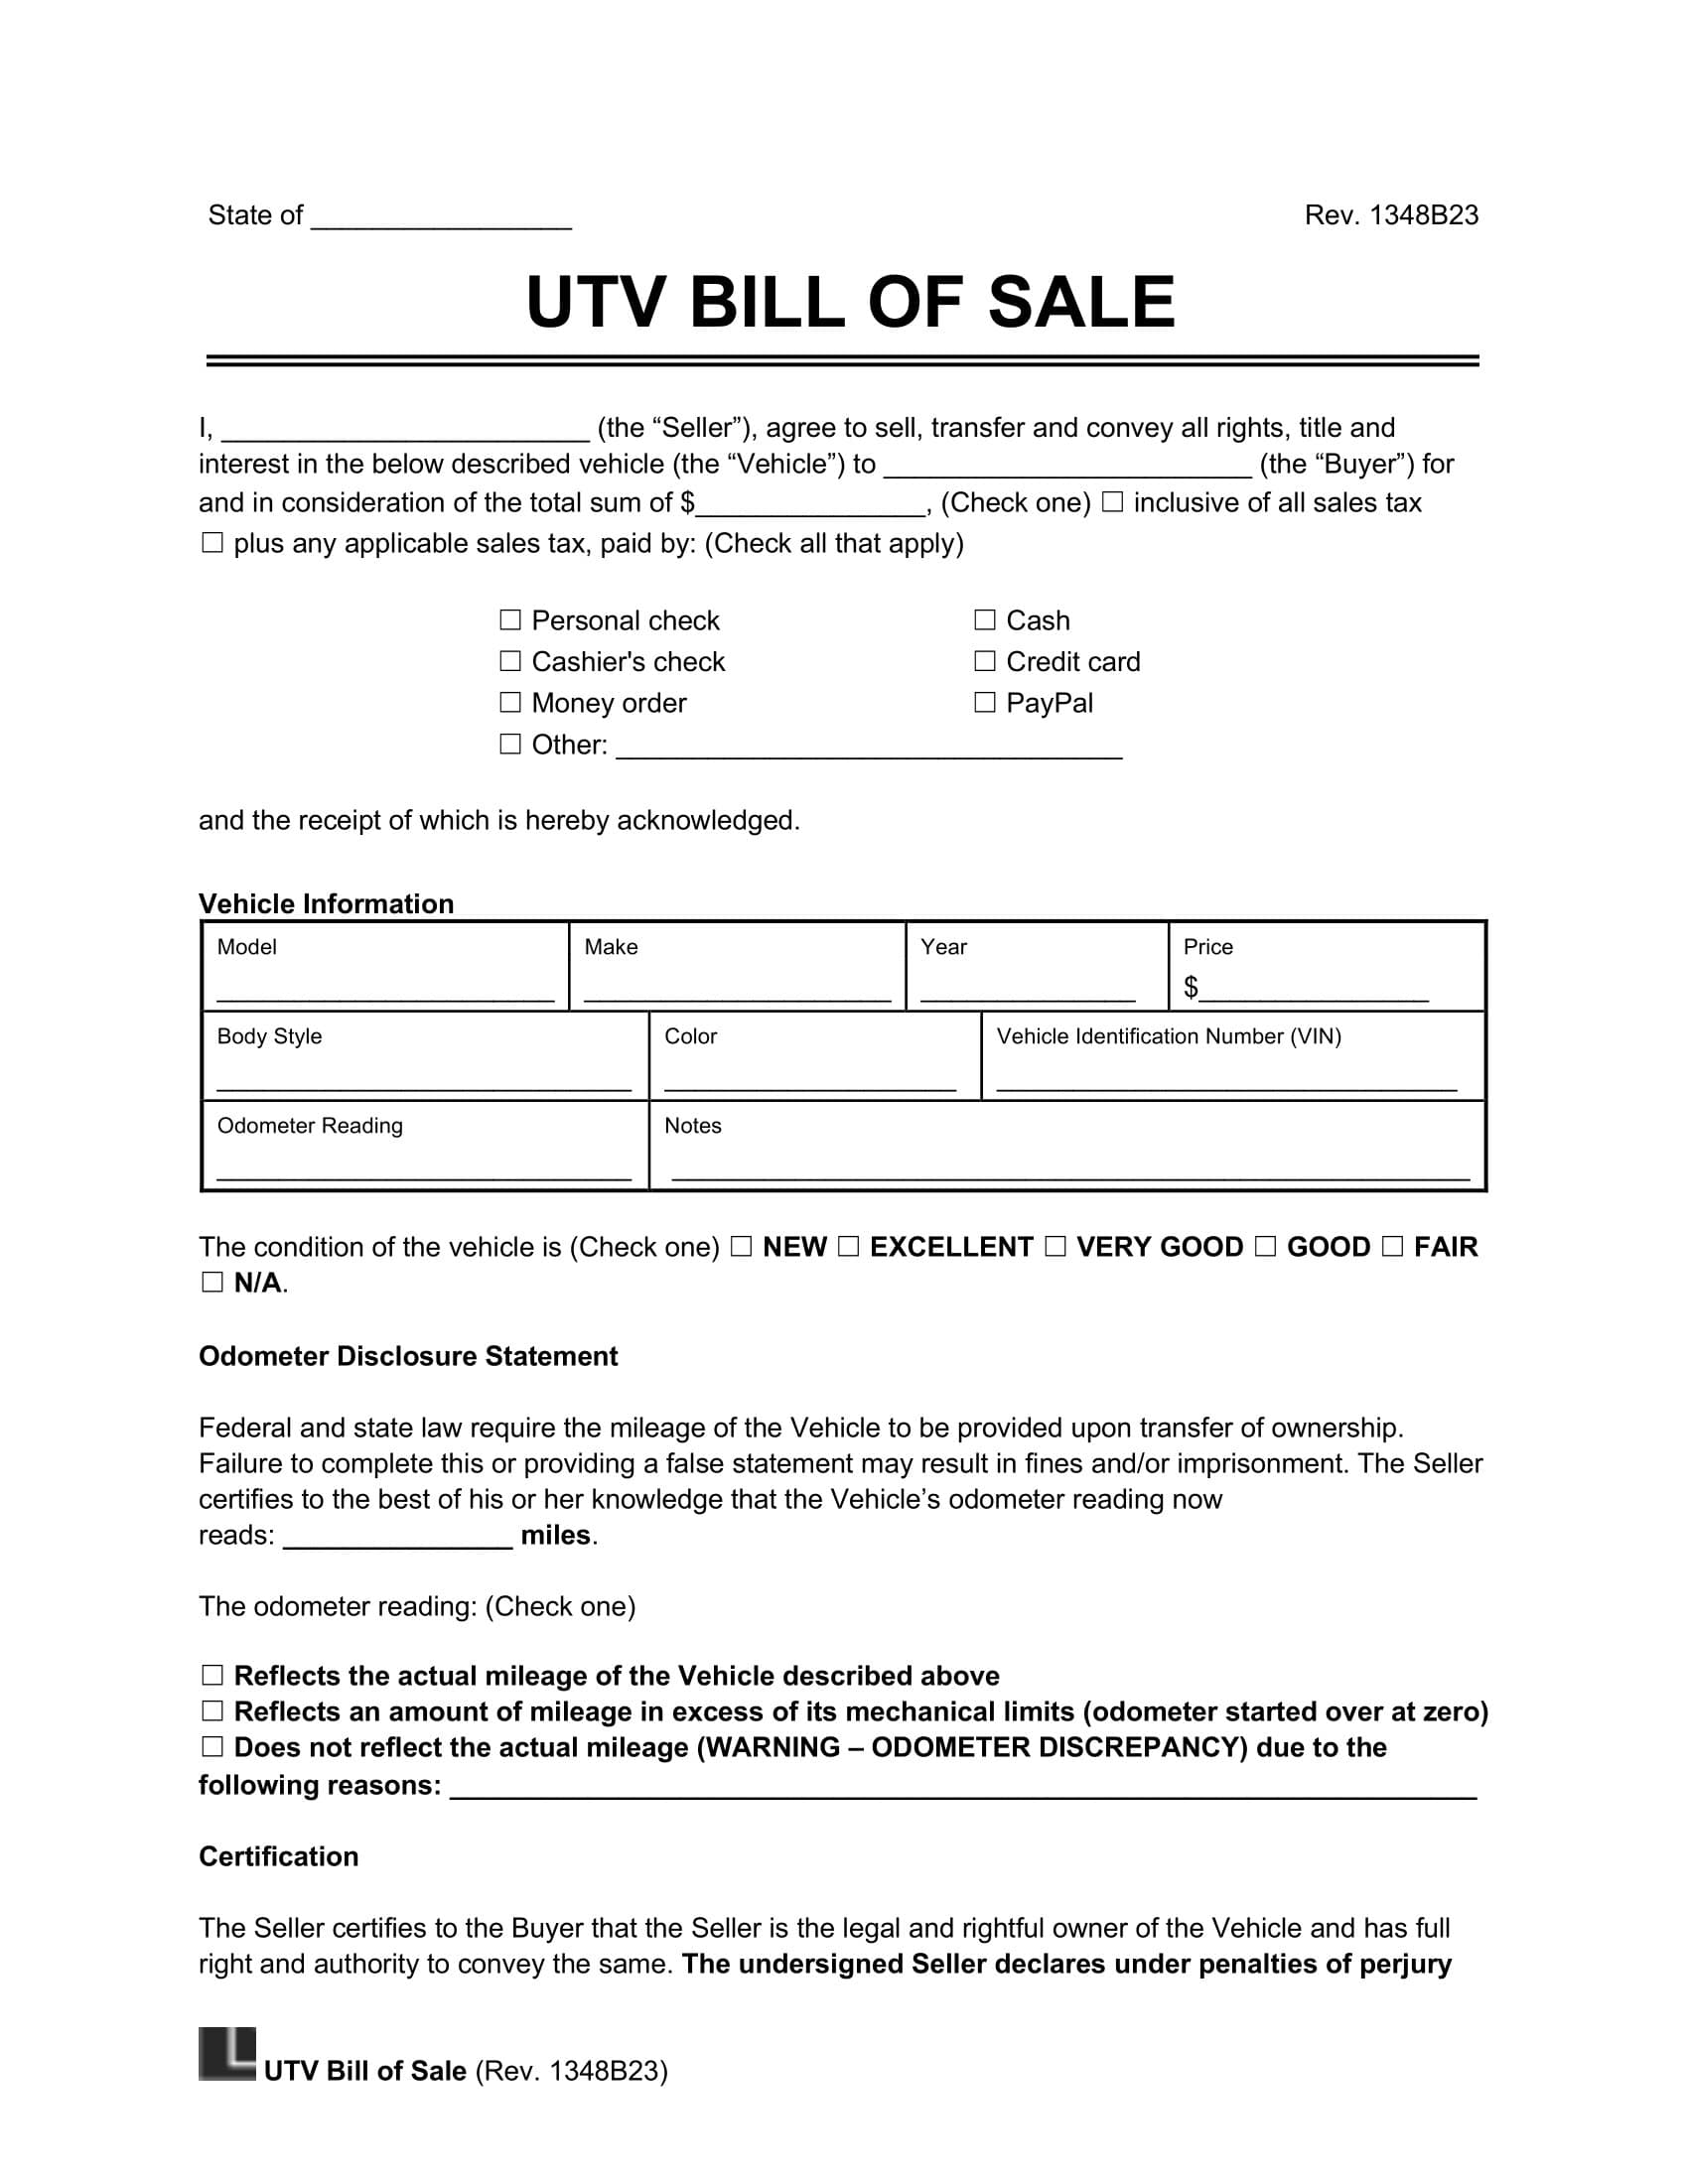 UTV Bill of Sale screenshot